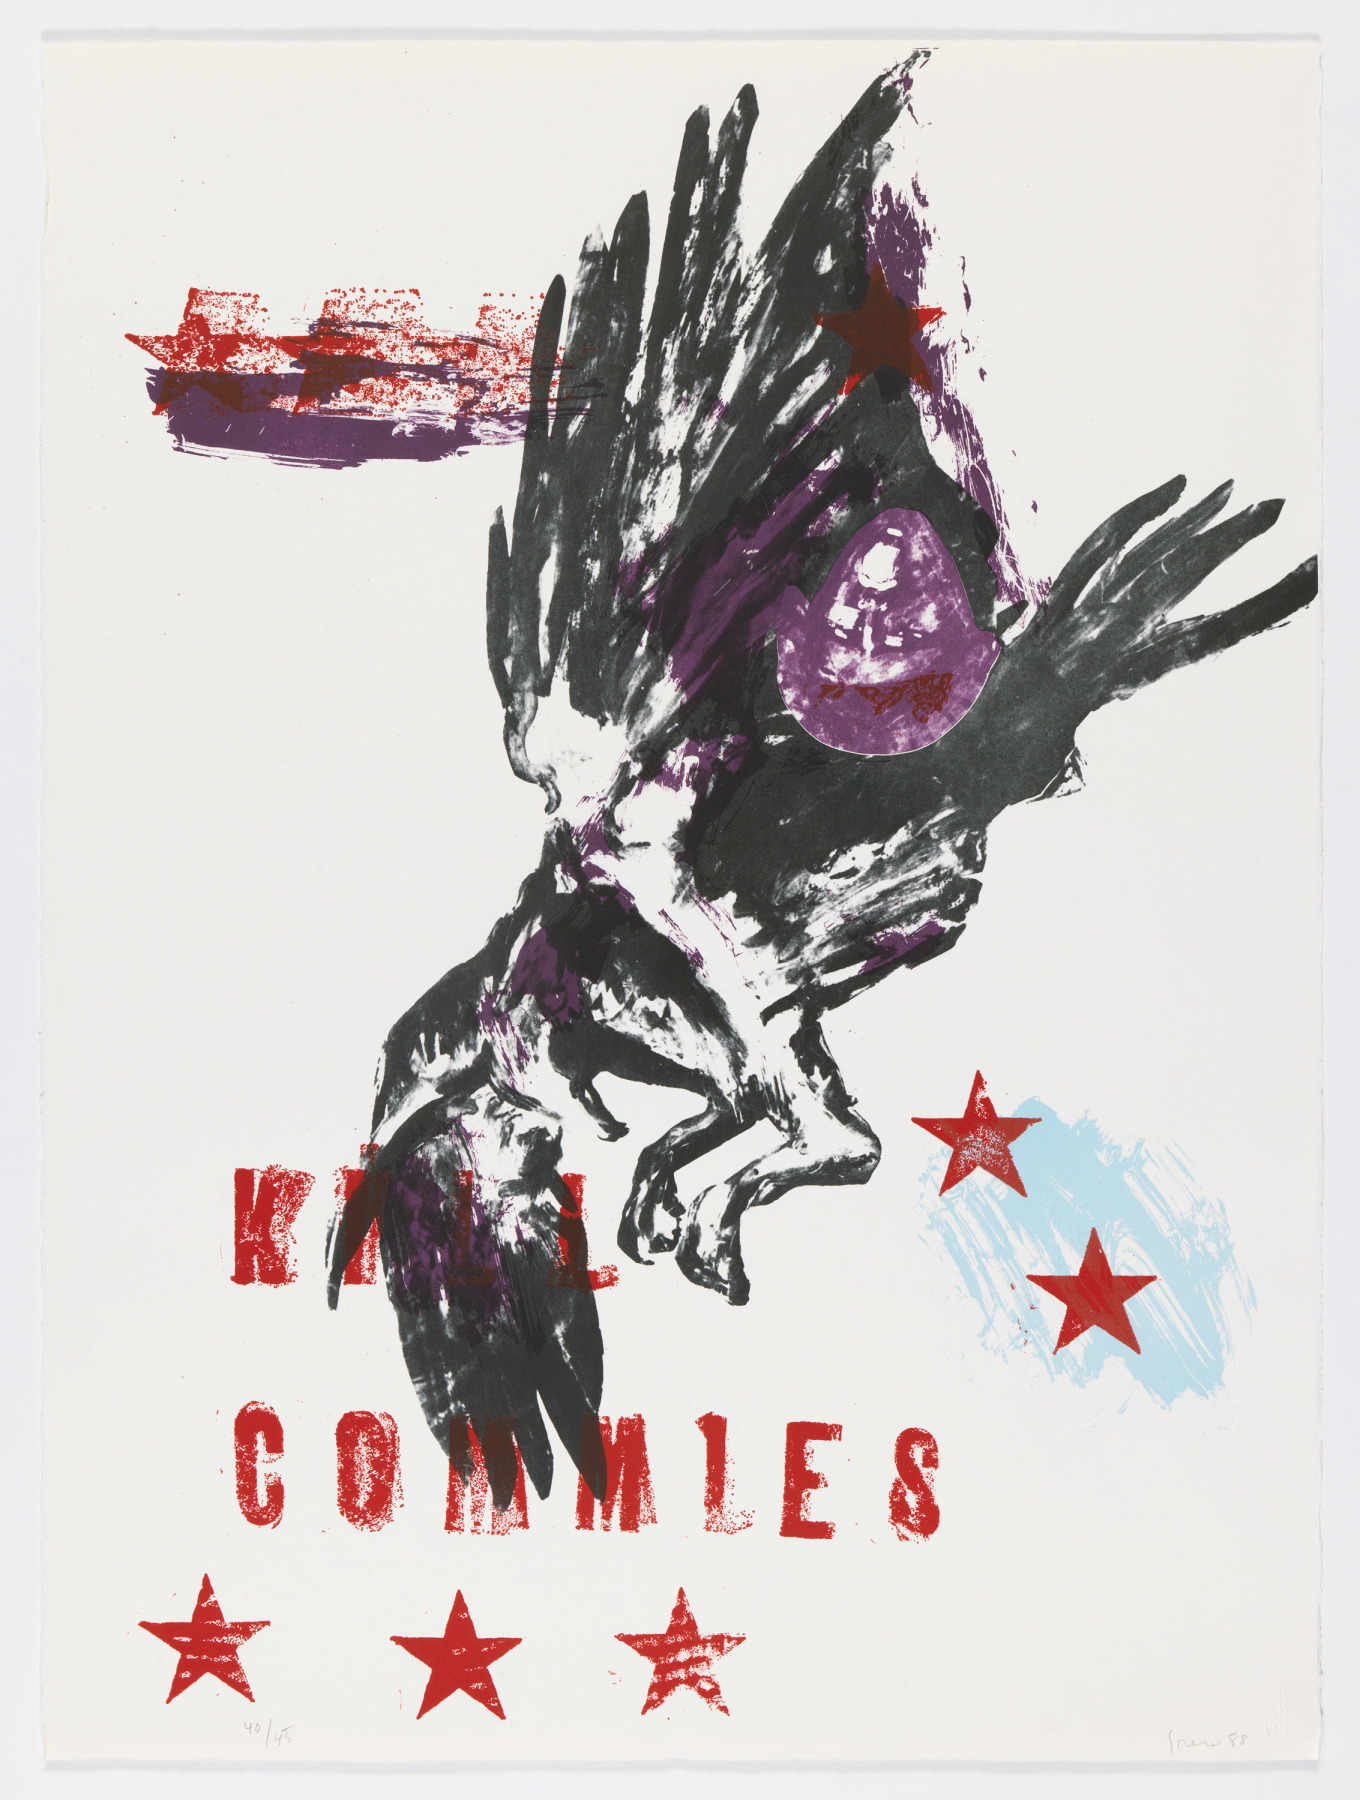 NS Kill commies image